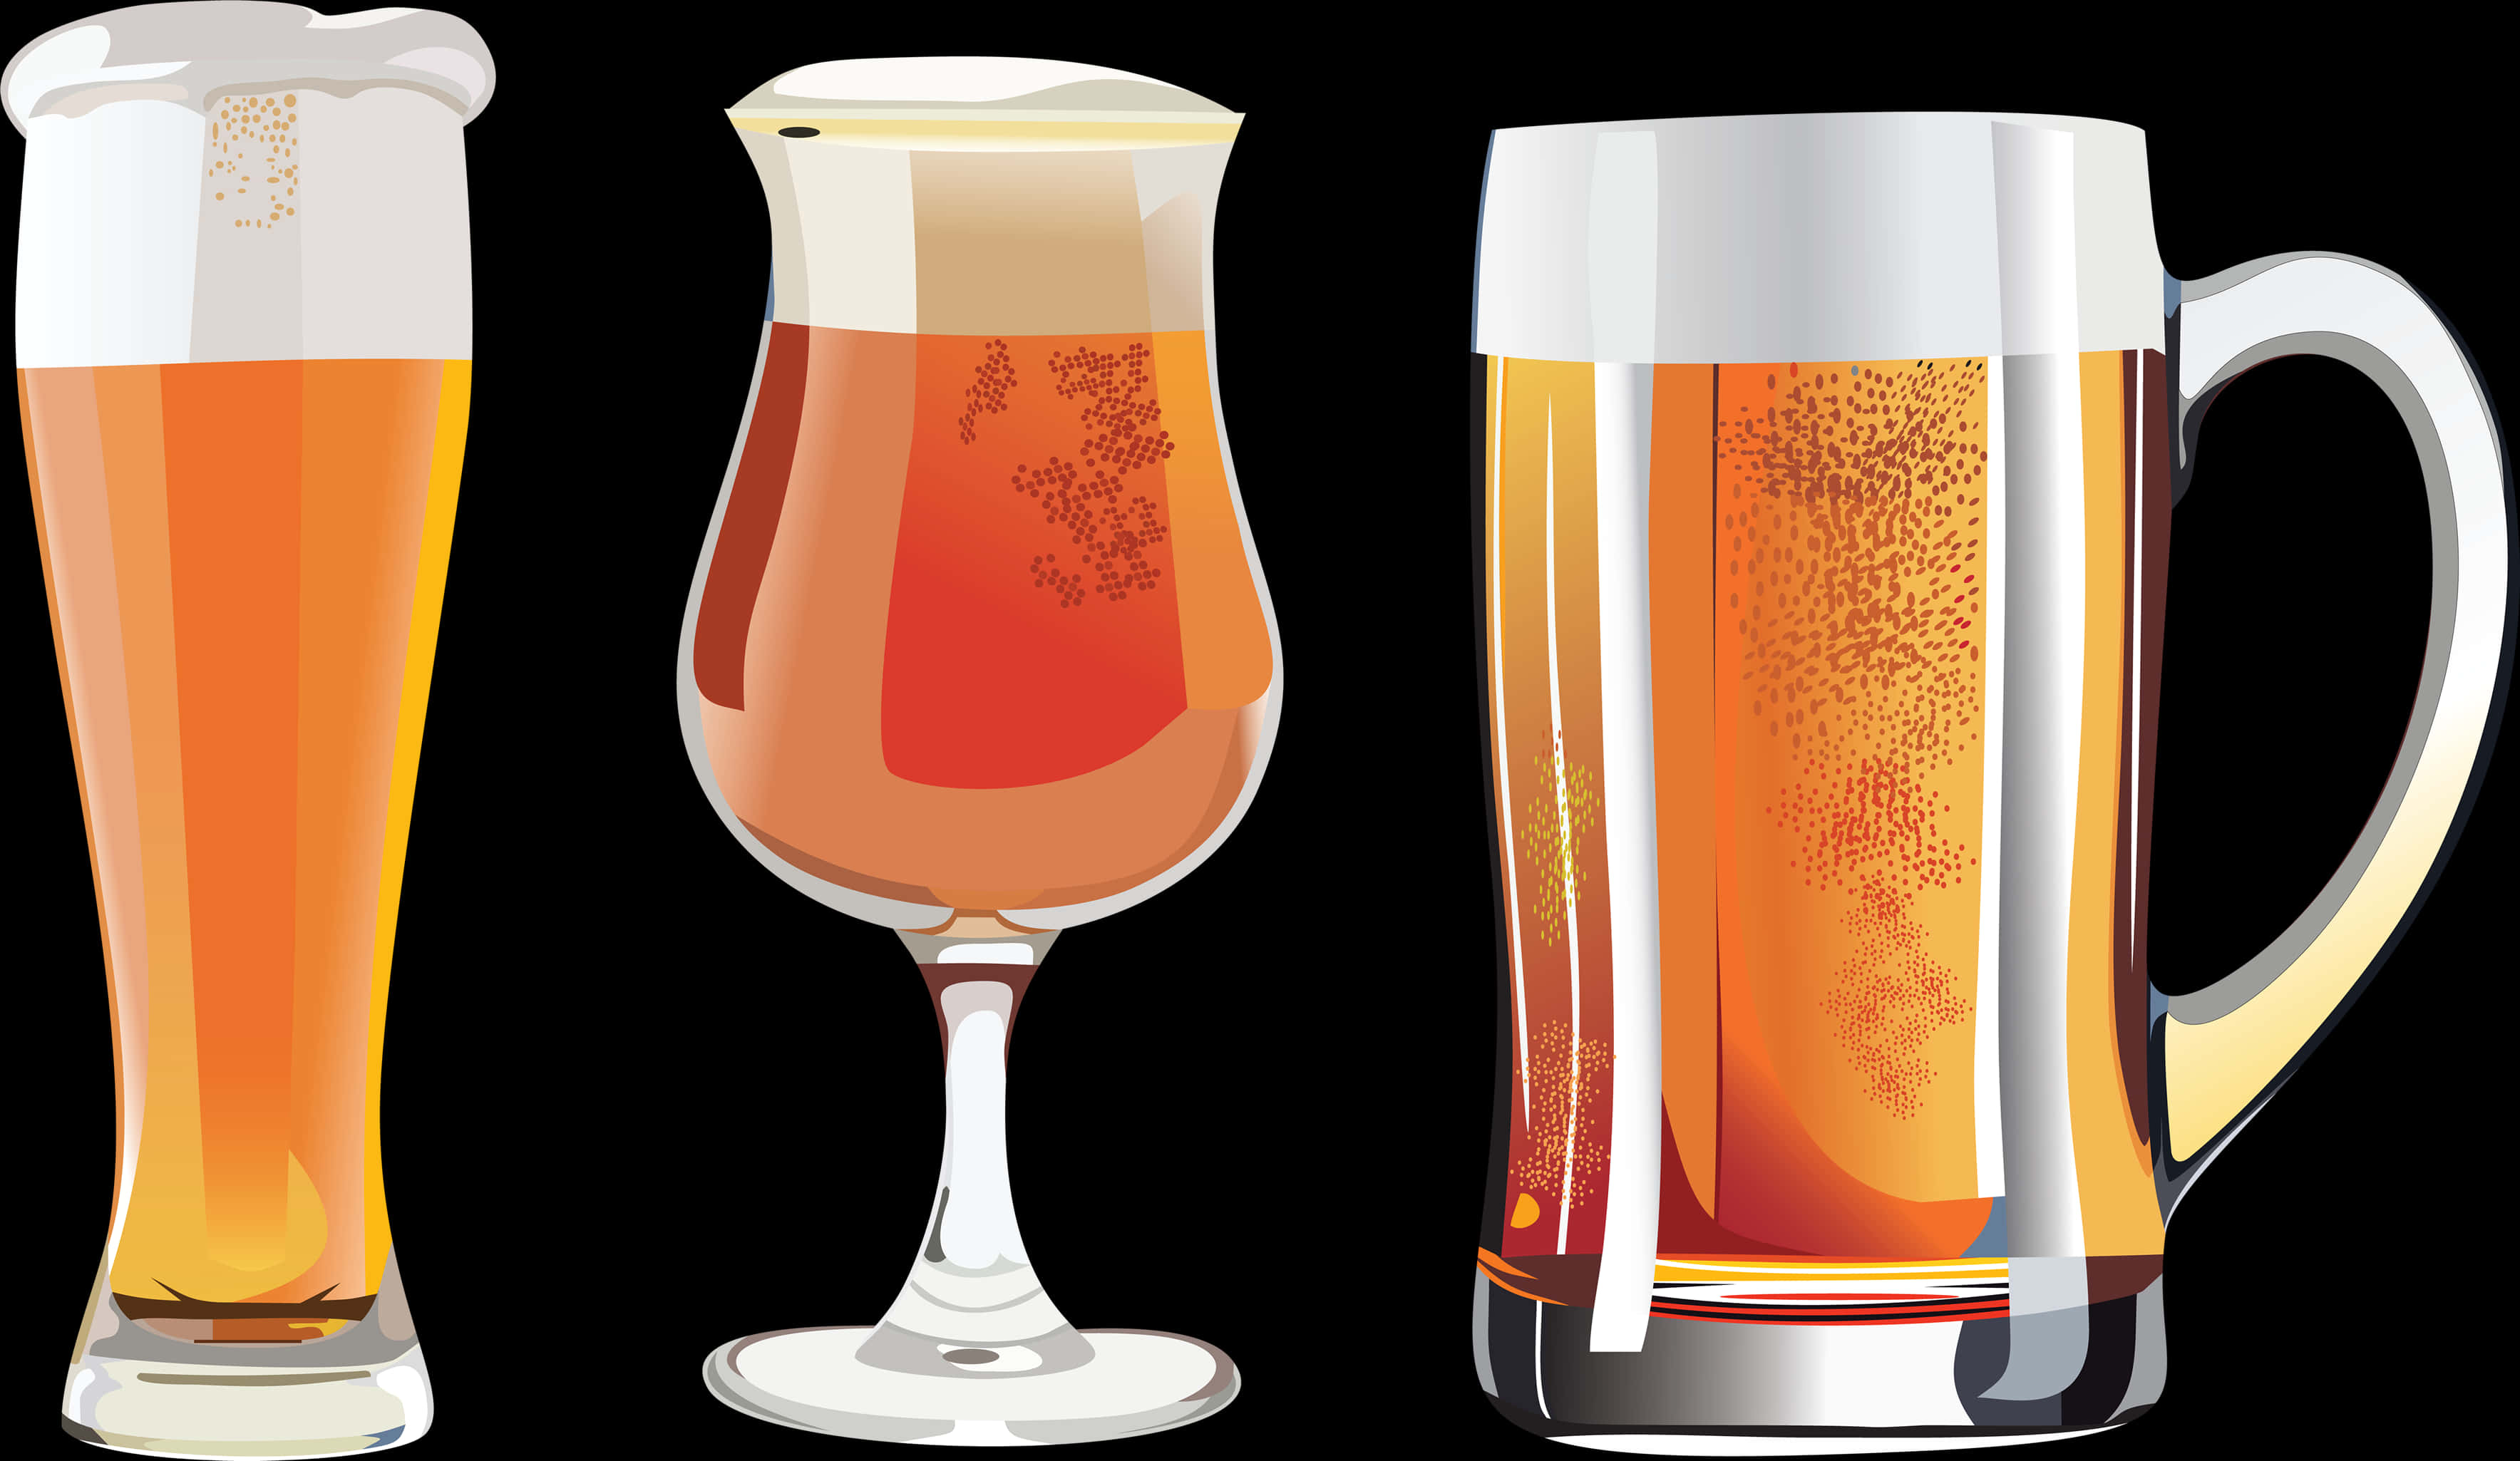 Varietyof Beer Glasses Illustration PNG